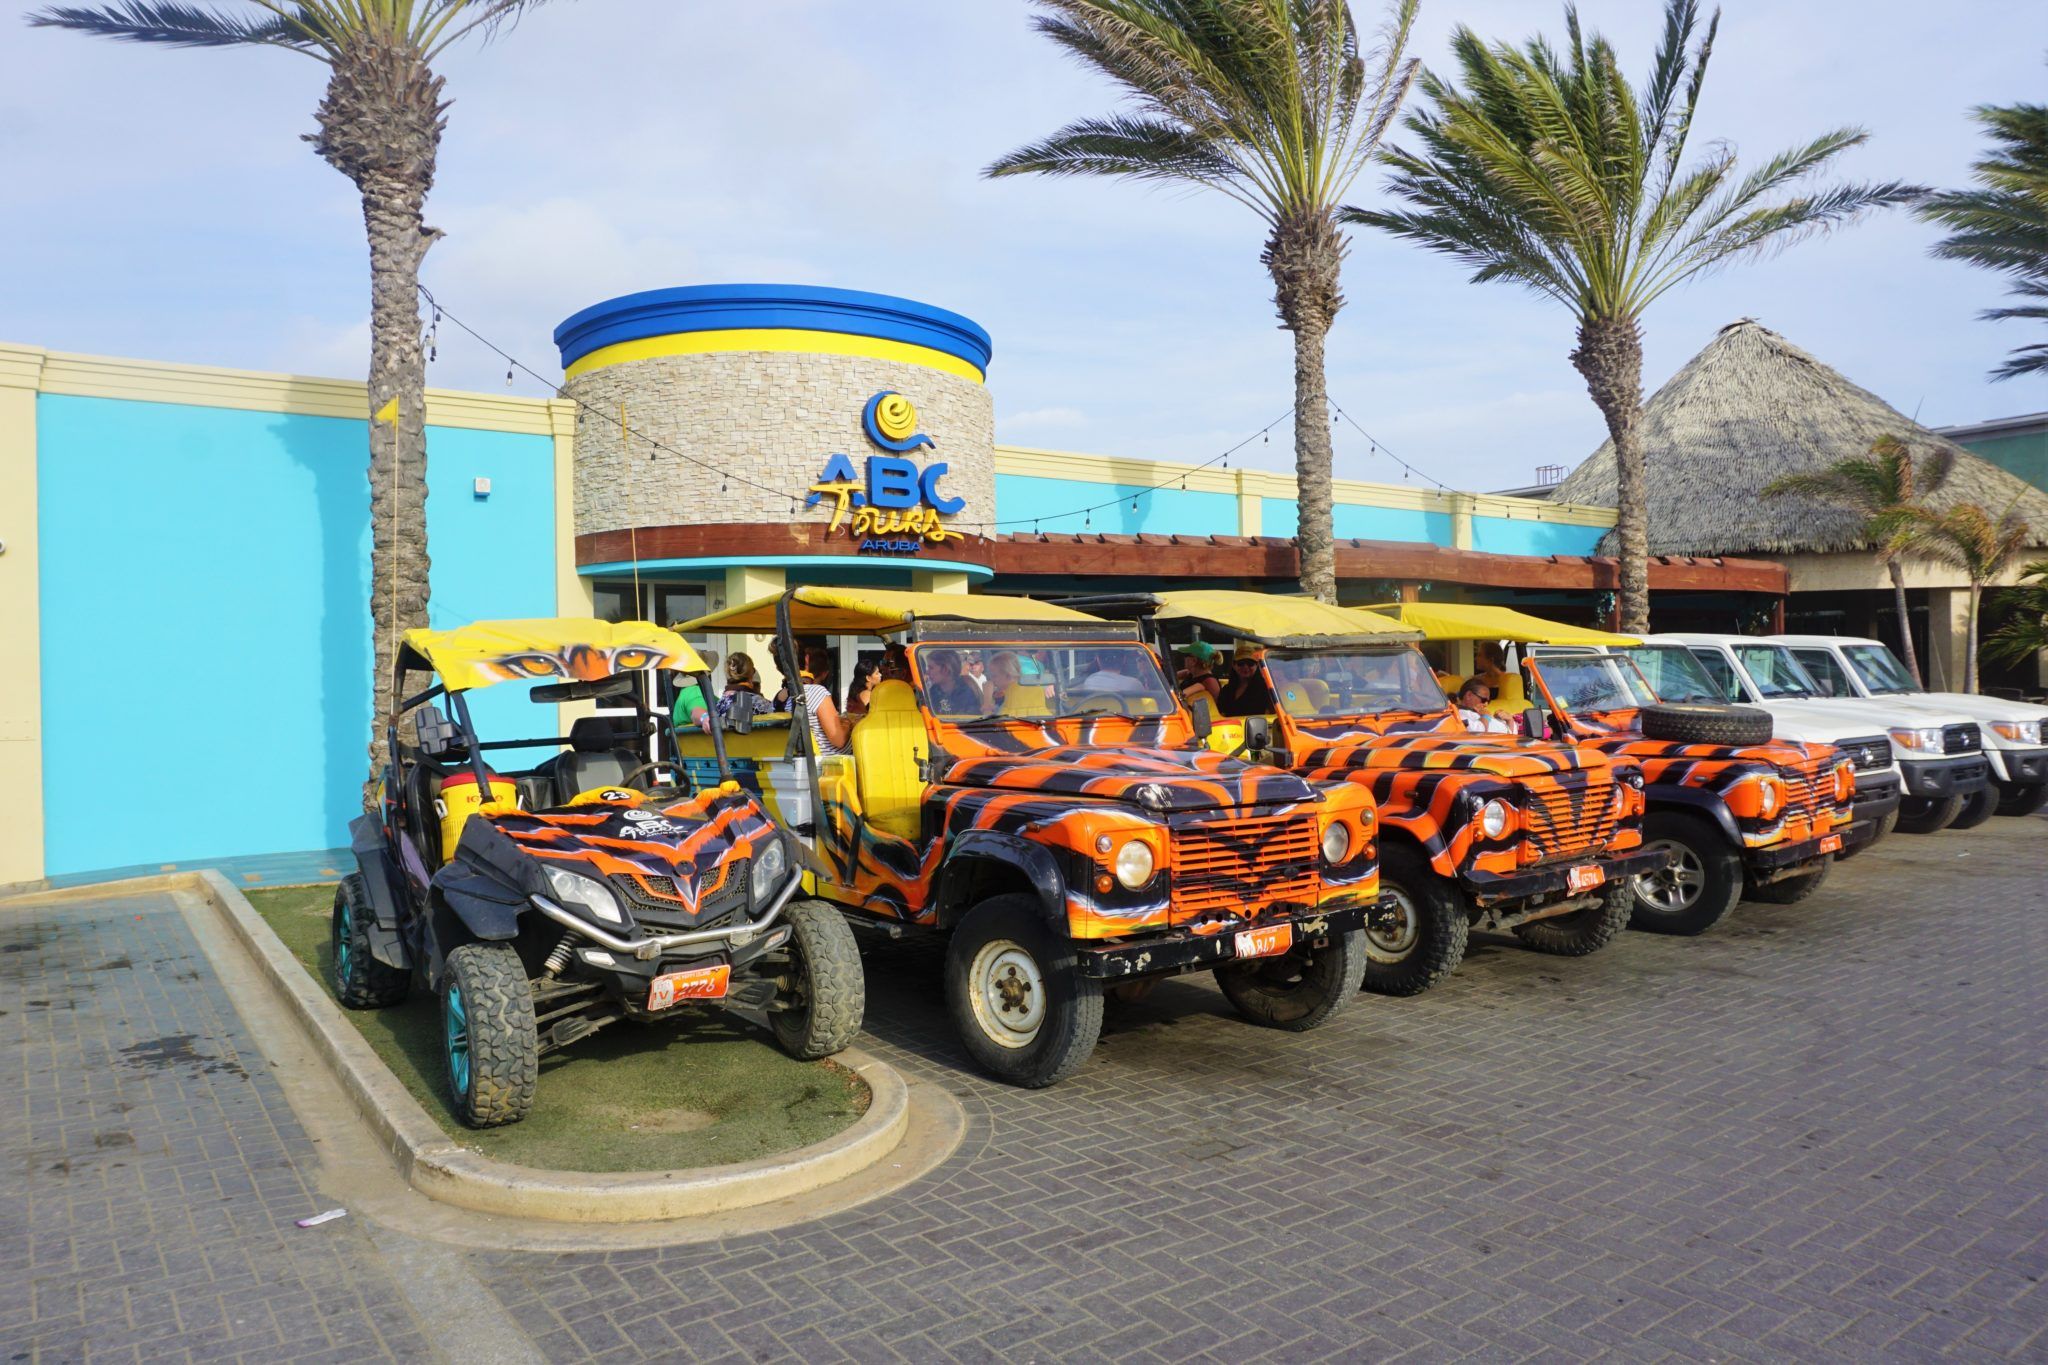 ABC Tours Aruba Island Ultimate Safari Review